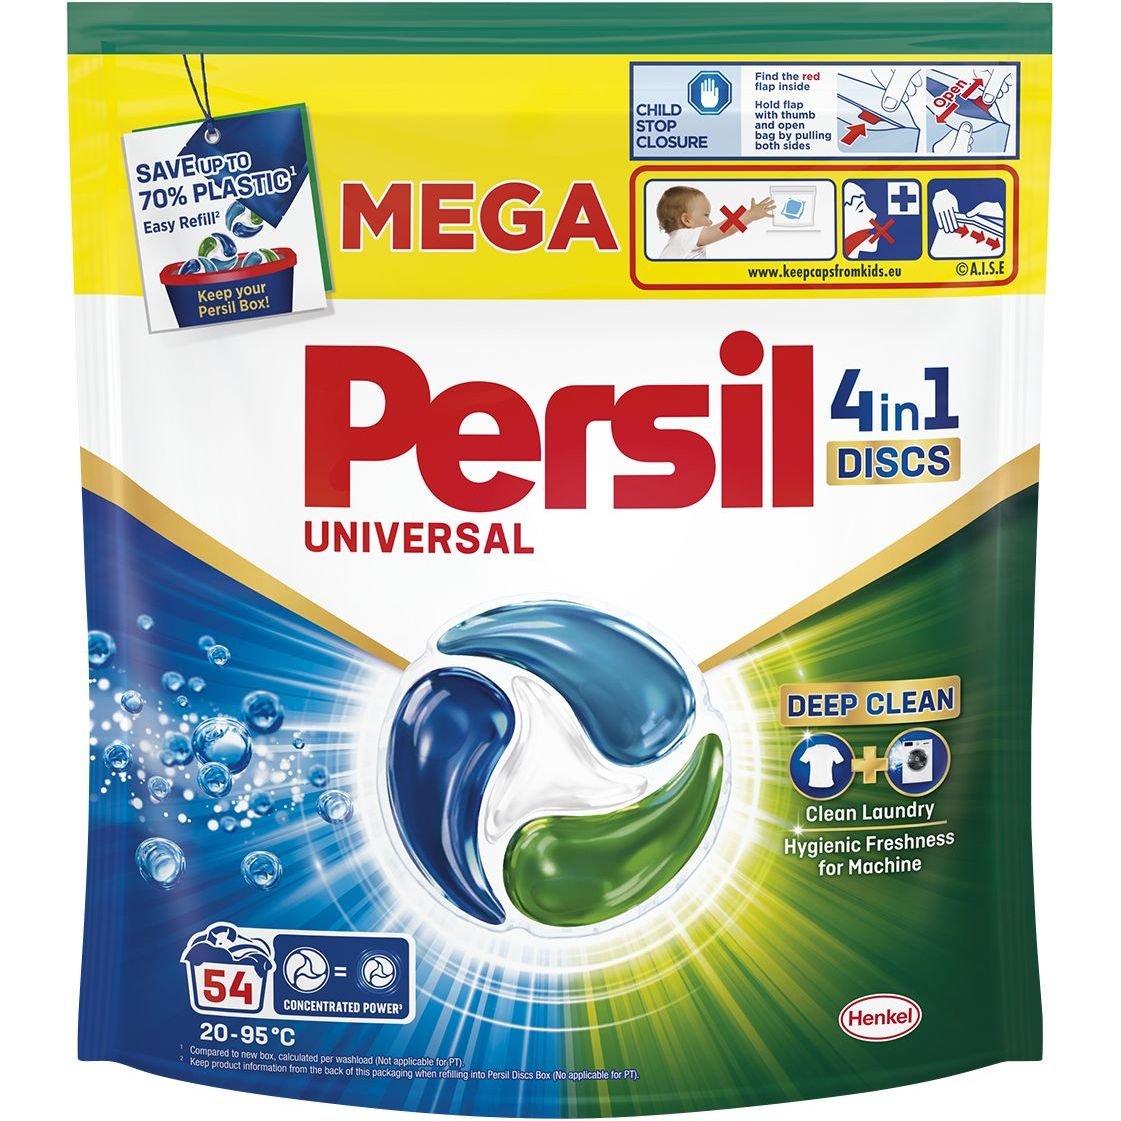 Диски для стирки Persil Deep Cleen Universal 4 in 1 Discs 54 шт. - фото 1